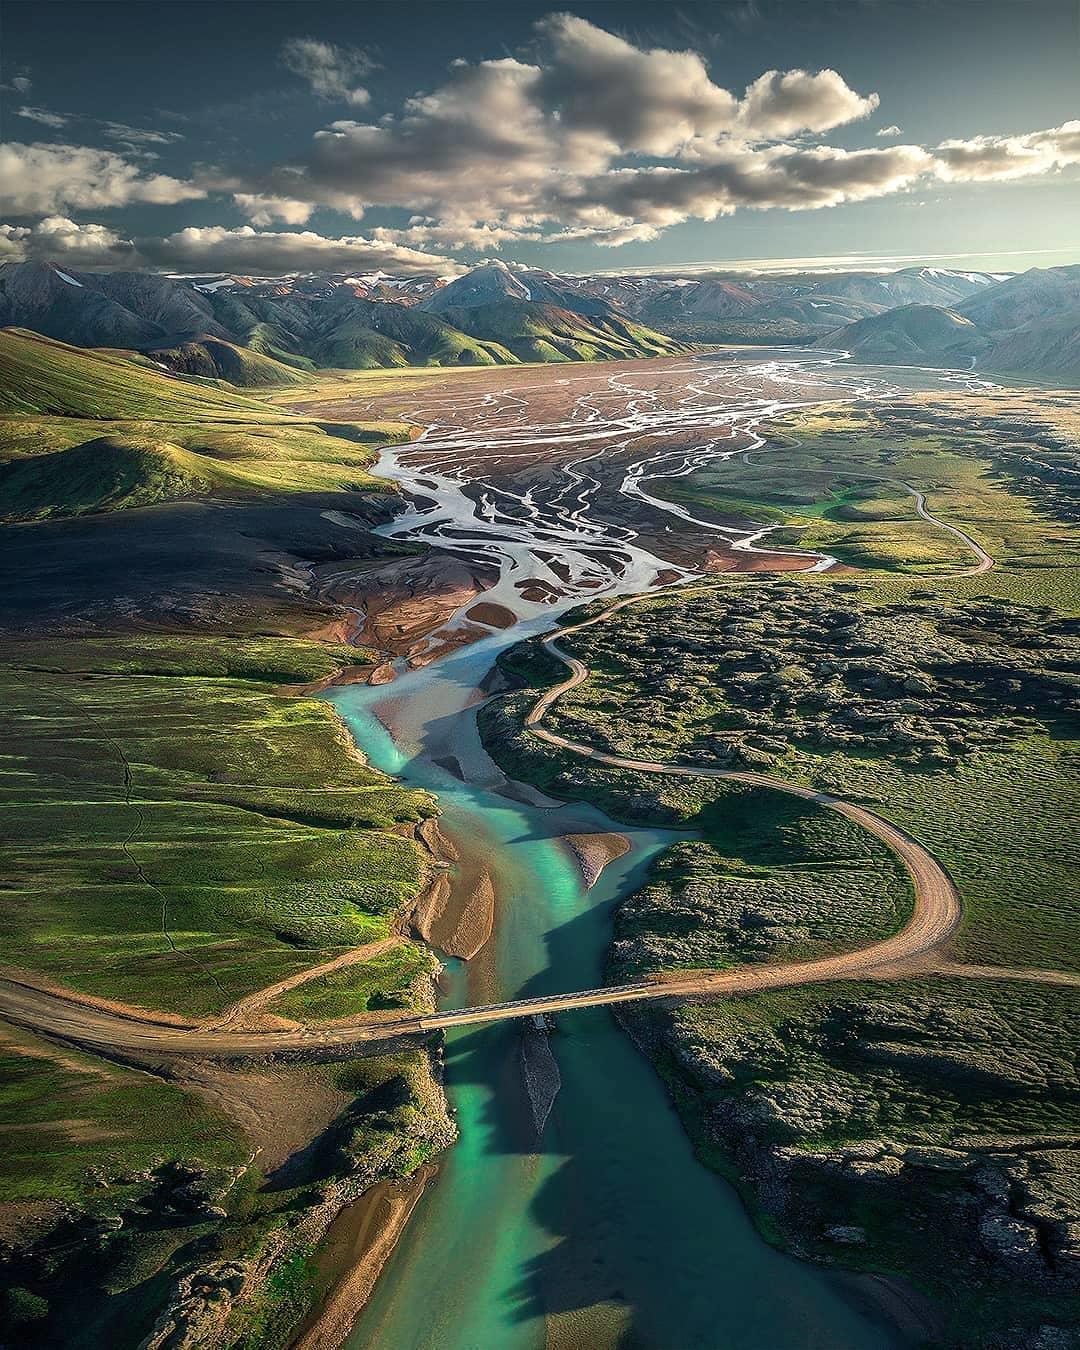  山河冰岛，来自摄影师Arnar Kristjansson。 